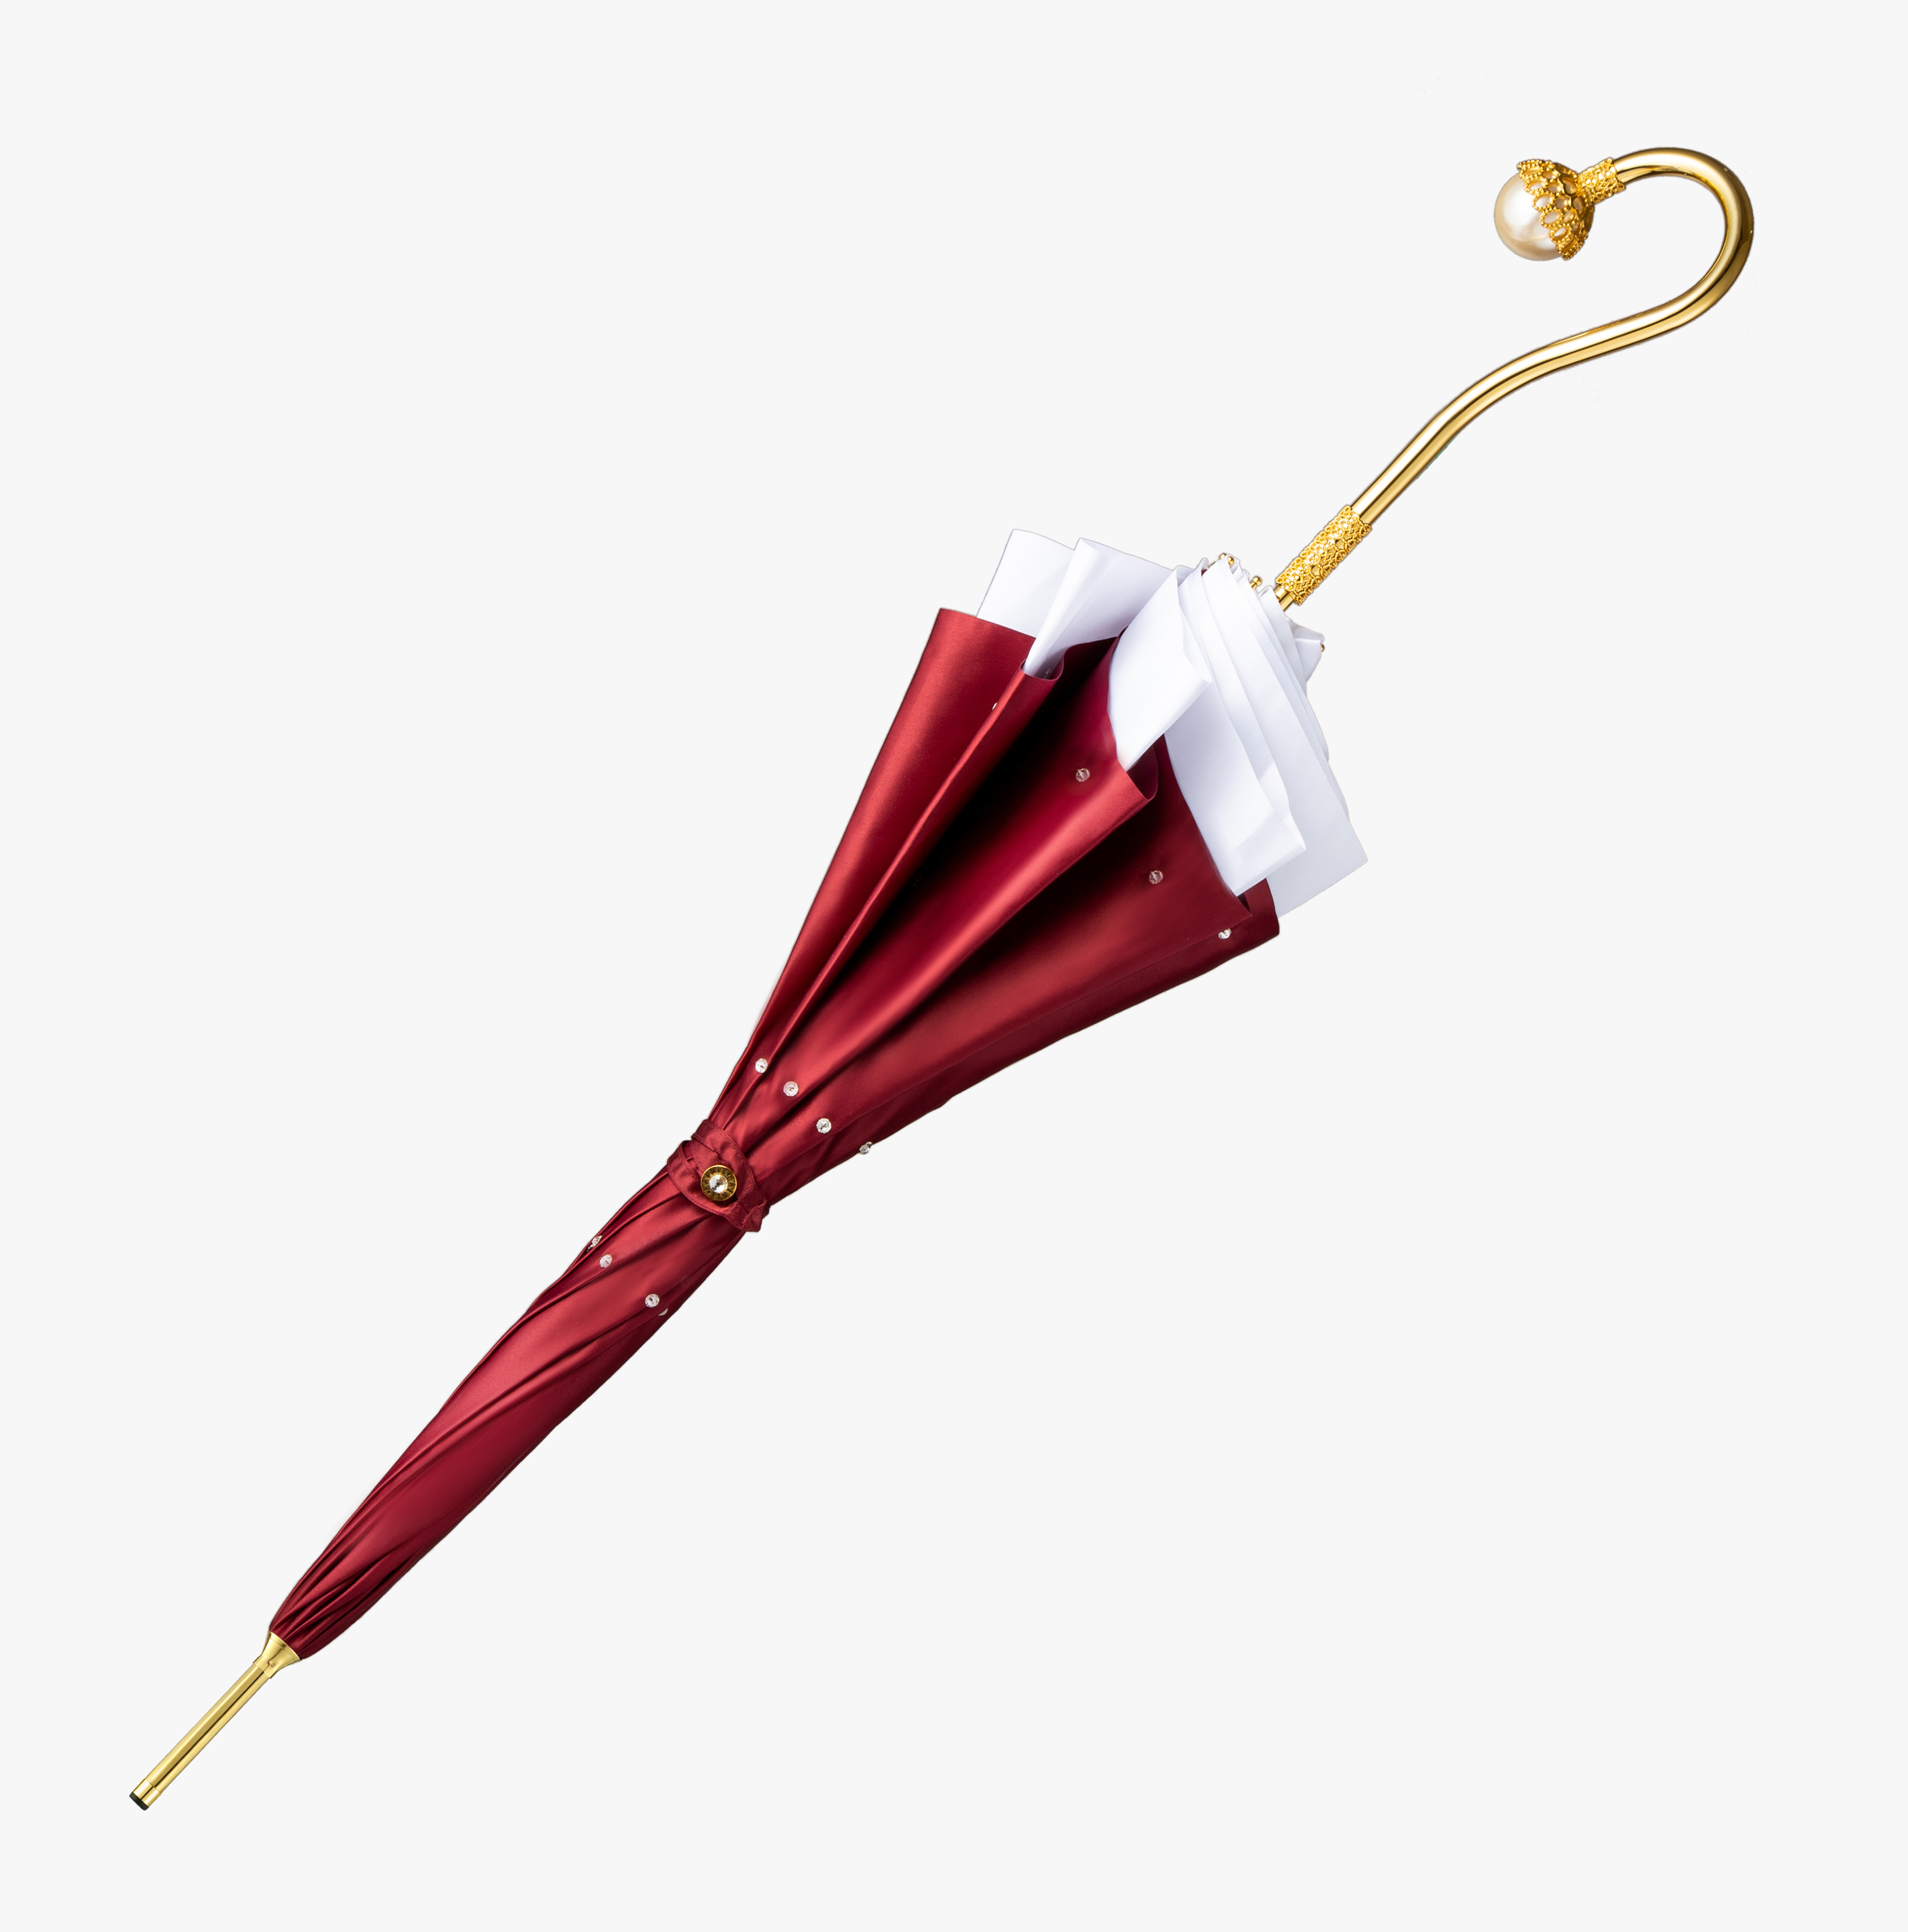 Amiti-semi-exquisite pearl elbow-long handle umbrella